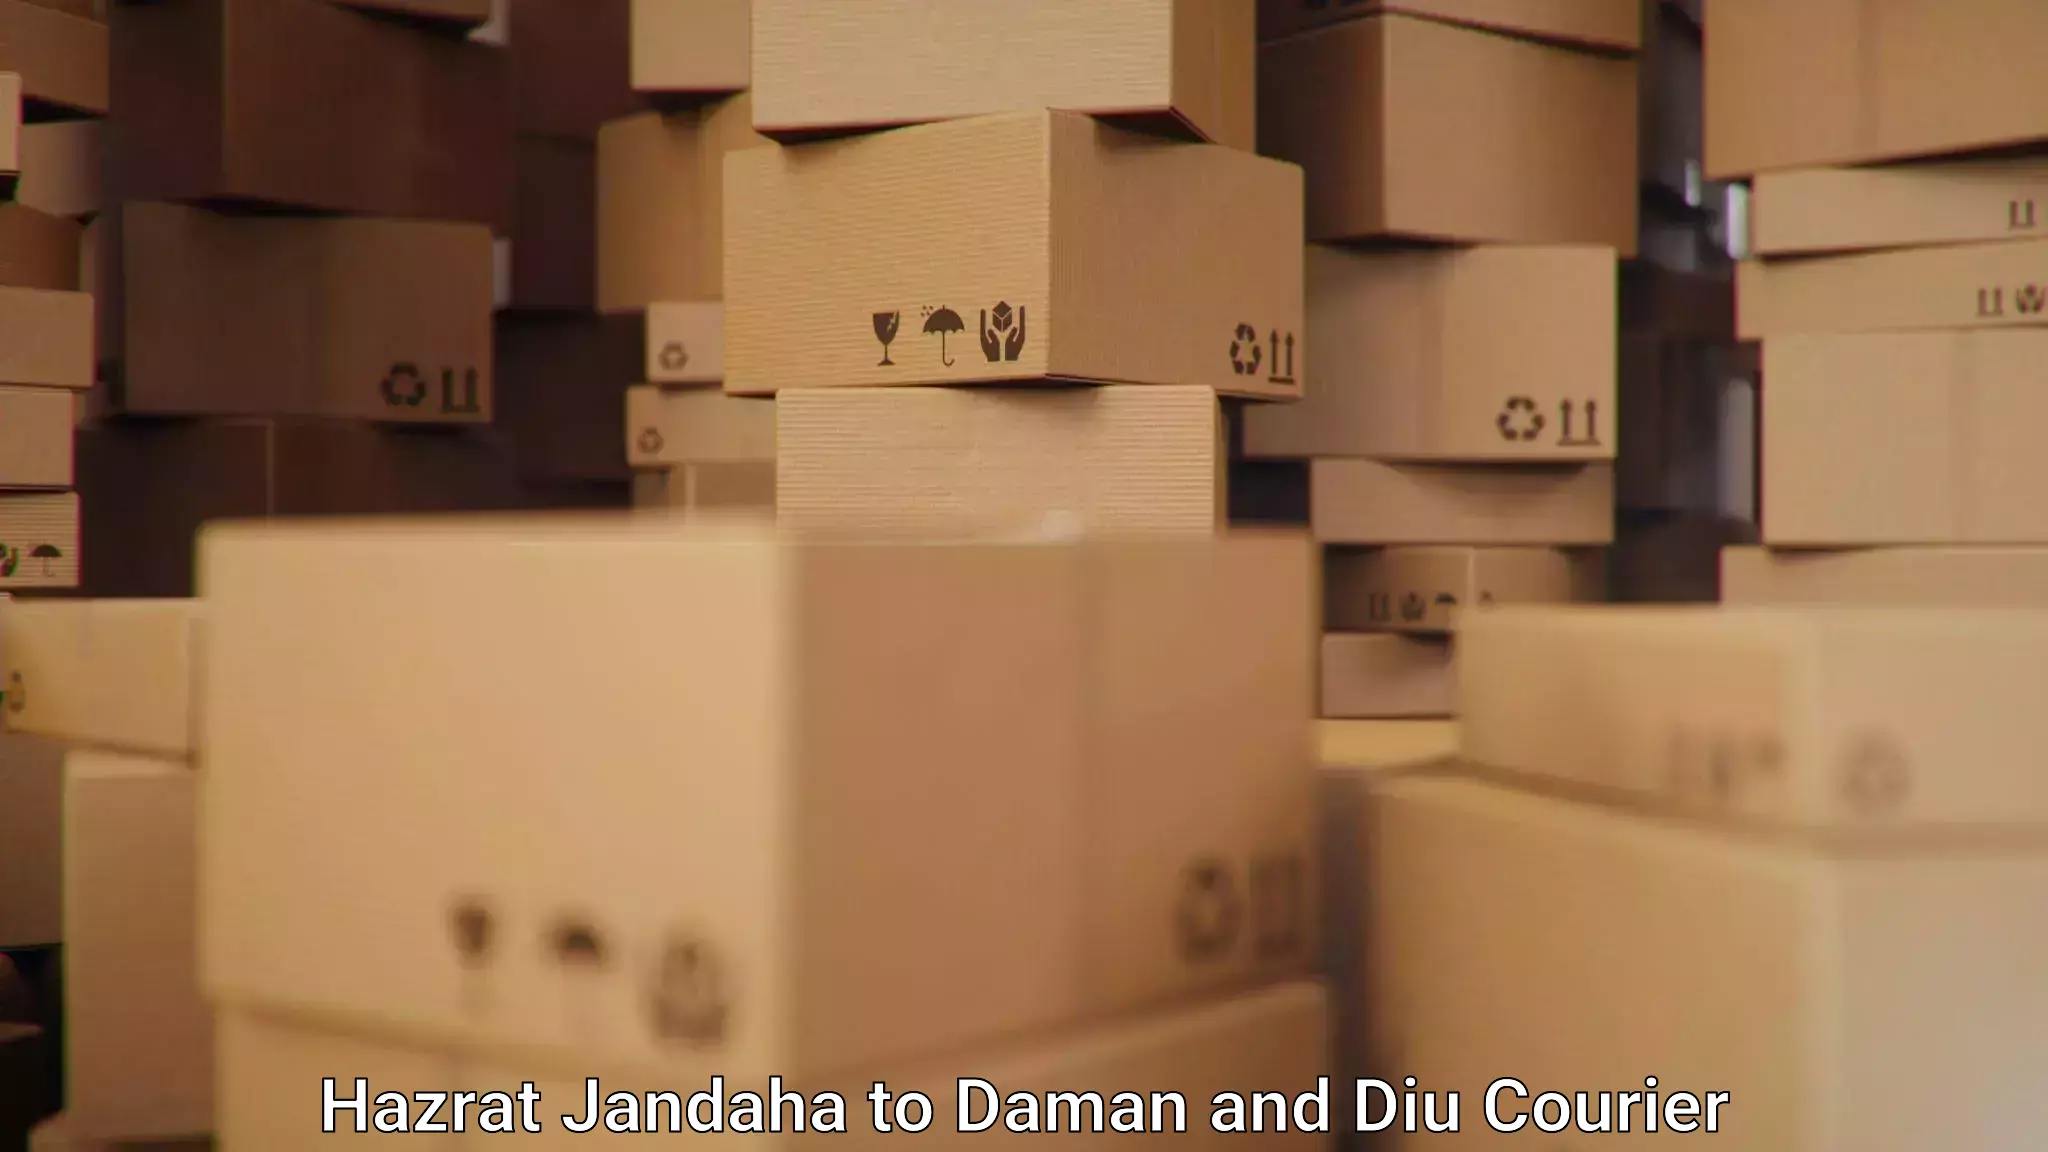 Shipping and handling Hazrat Jandaha to Diu